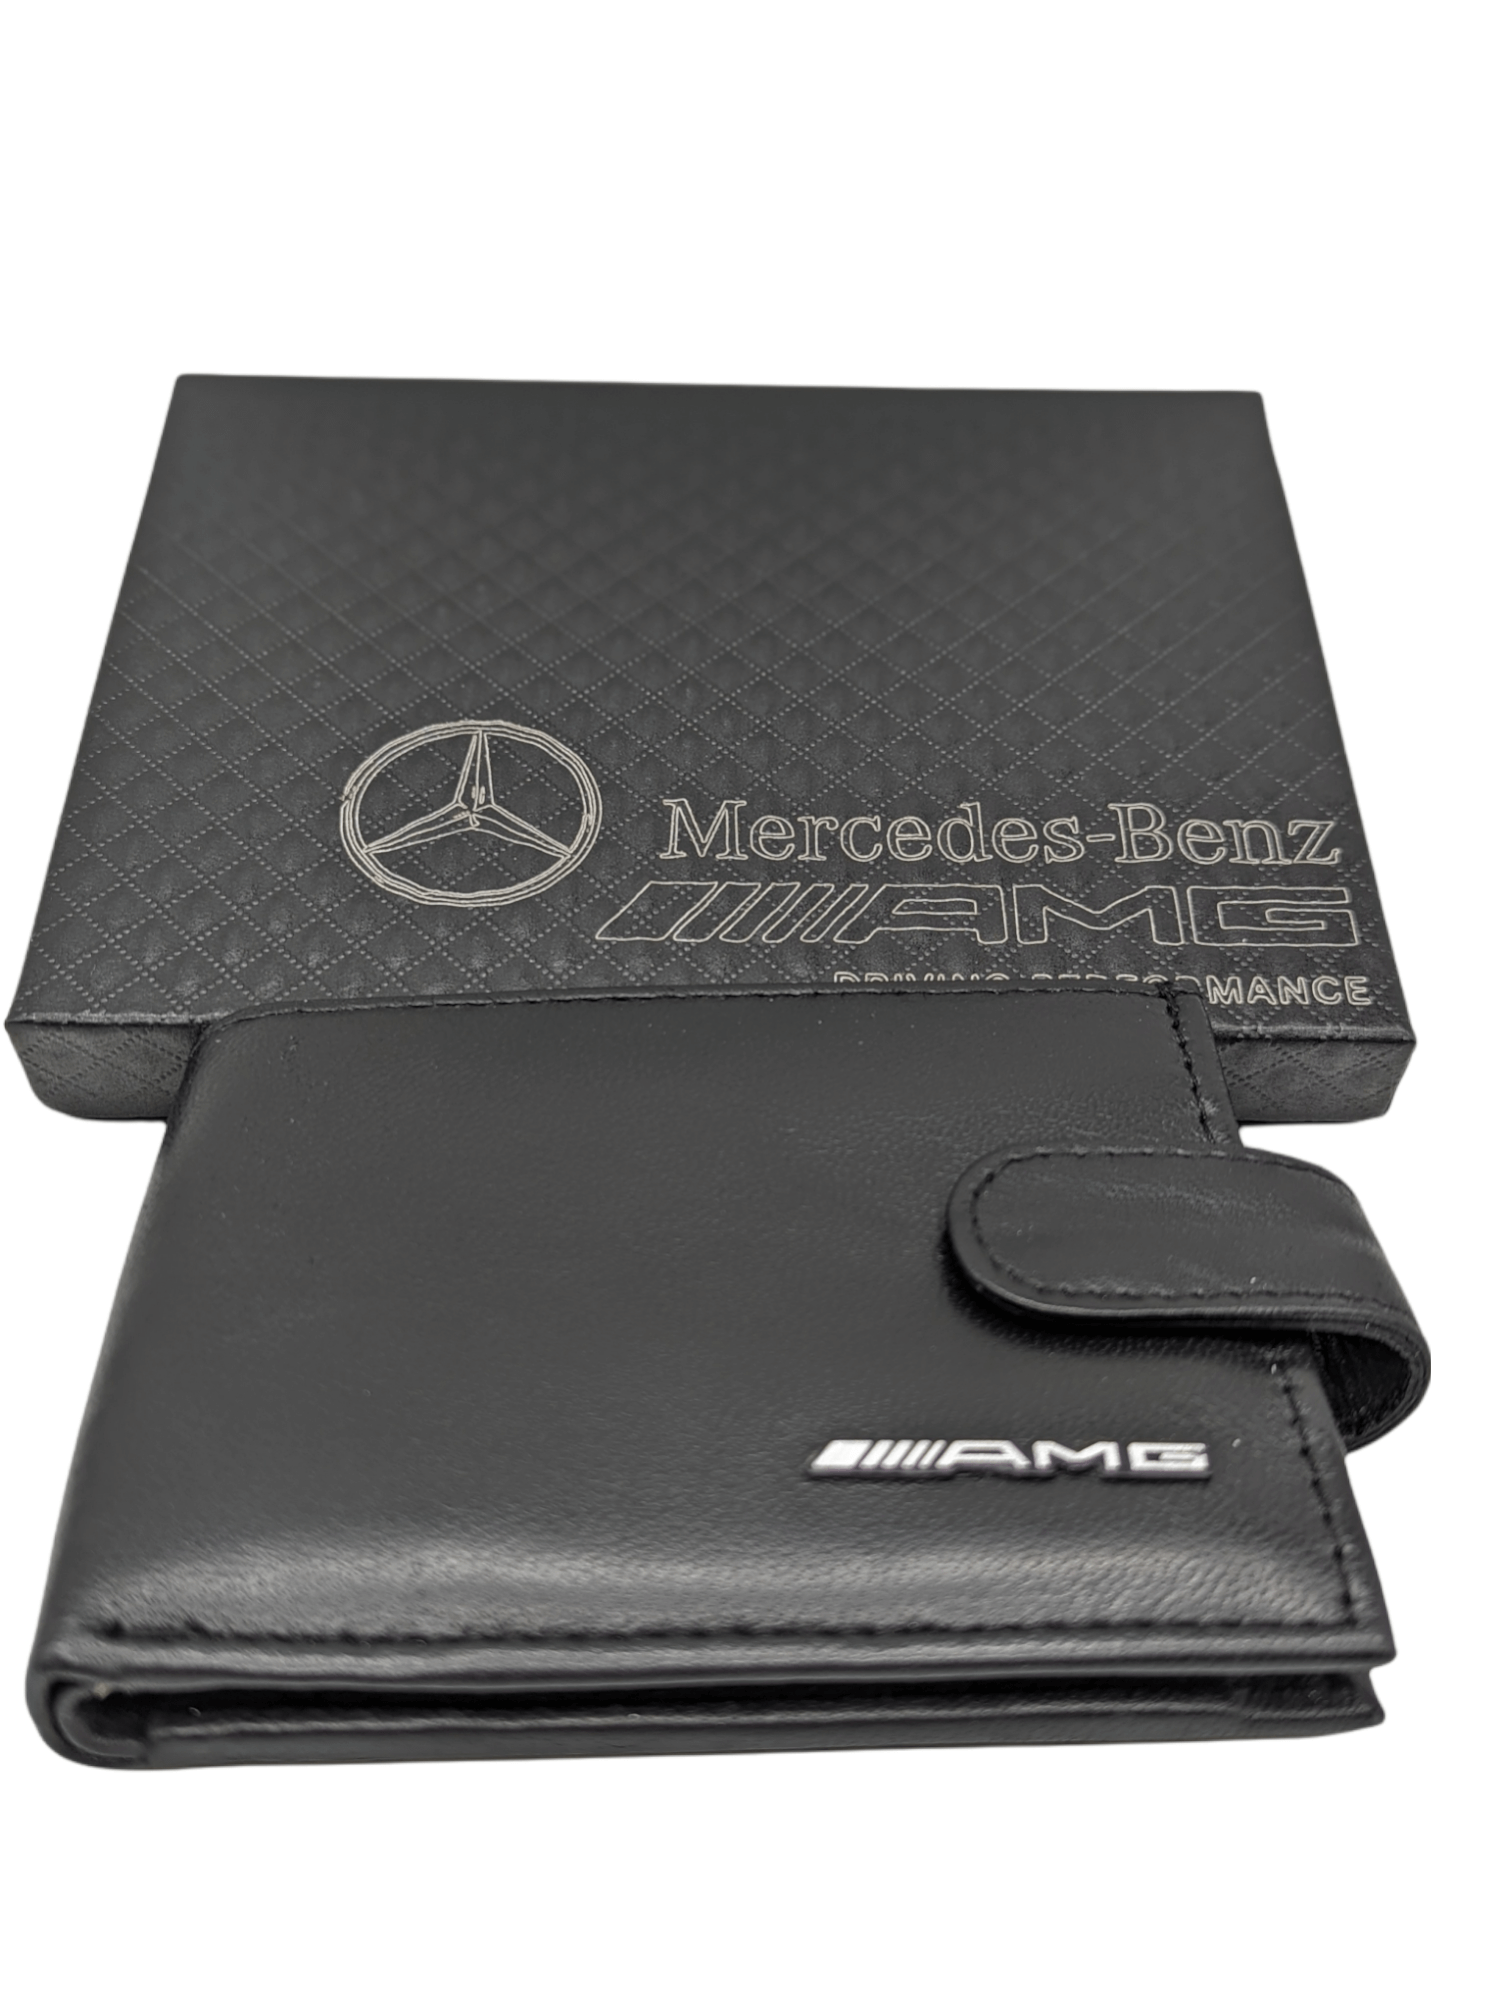 Swolit Merchandise Mercedes Black Genuine Leather Wallet Swolit, Gift Boxed